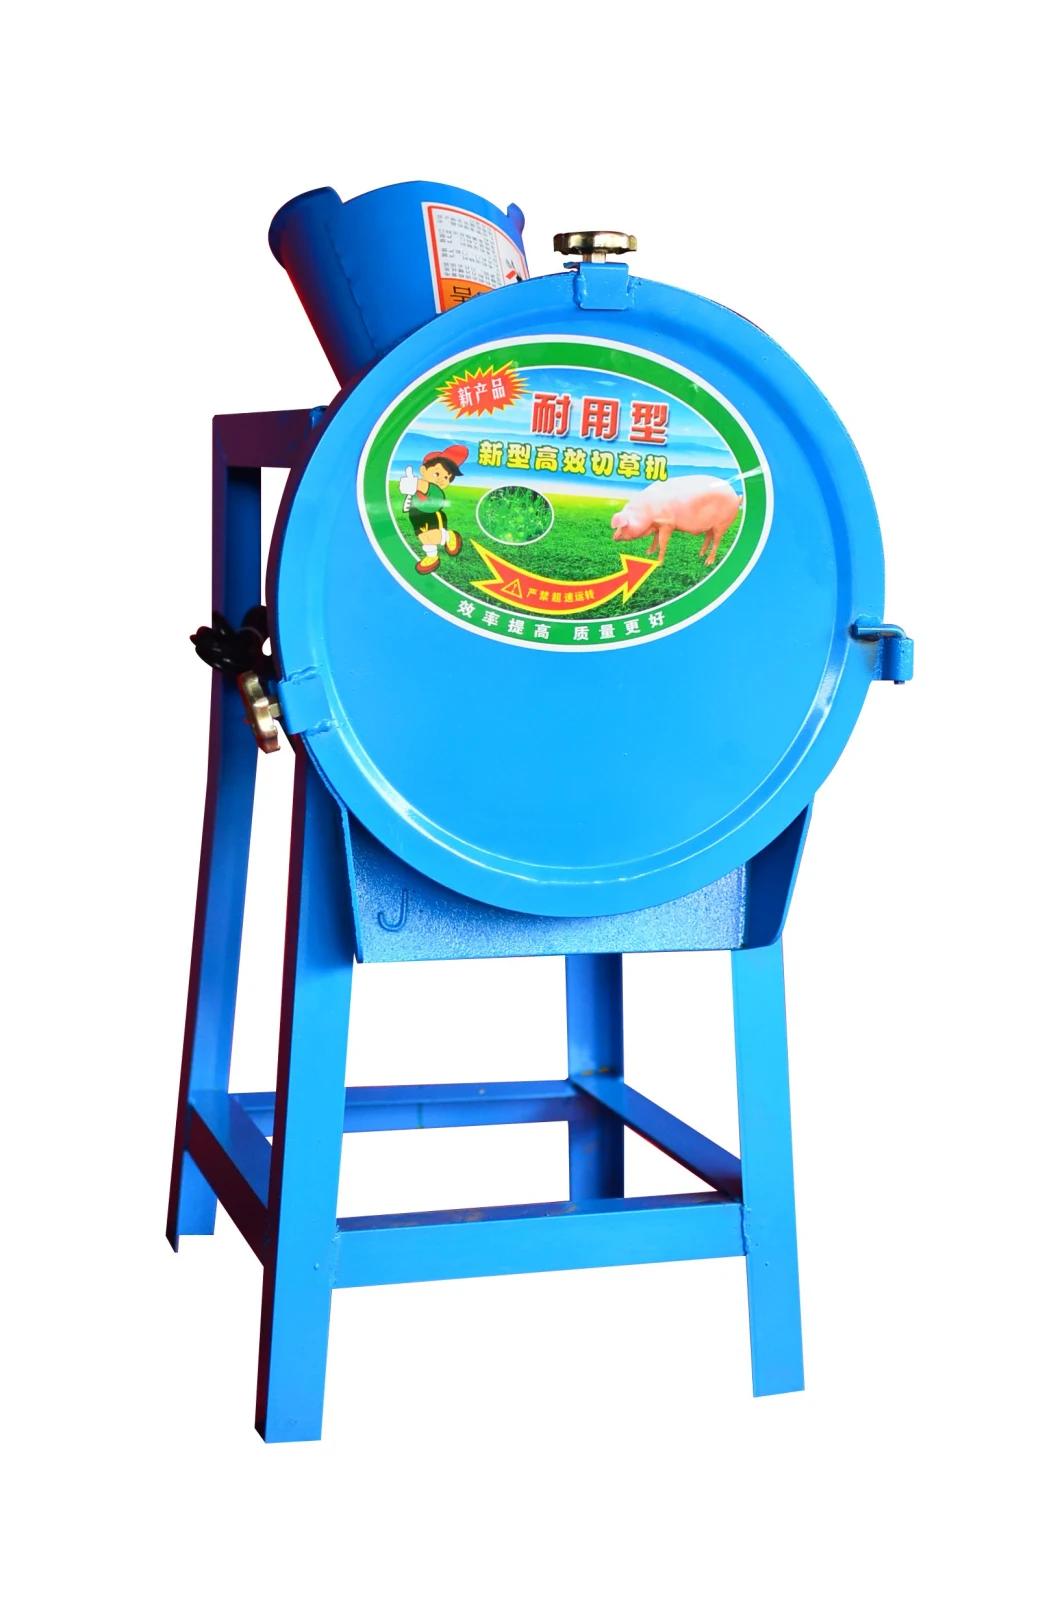 China Manufactured Chaff Cutter Food Cutting Machine for Farm Animal Feeding